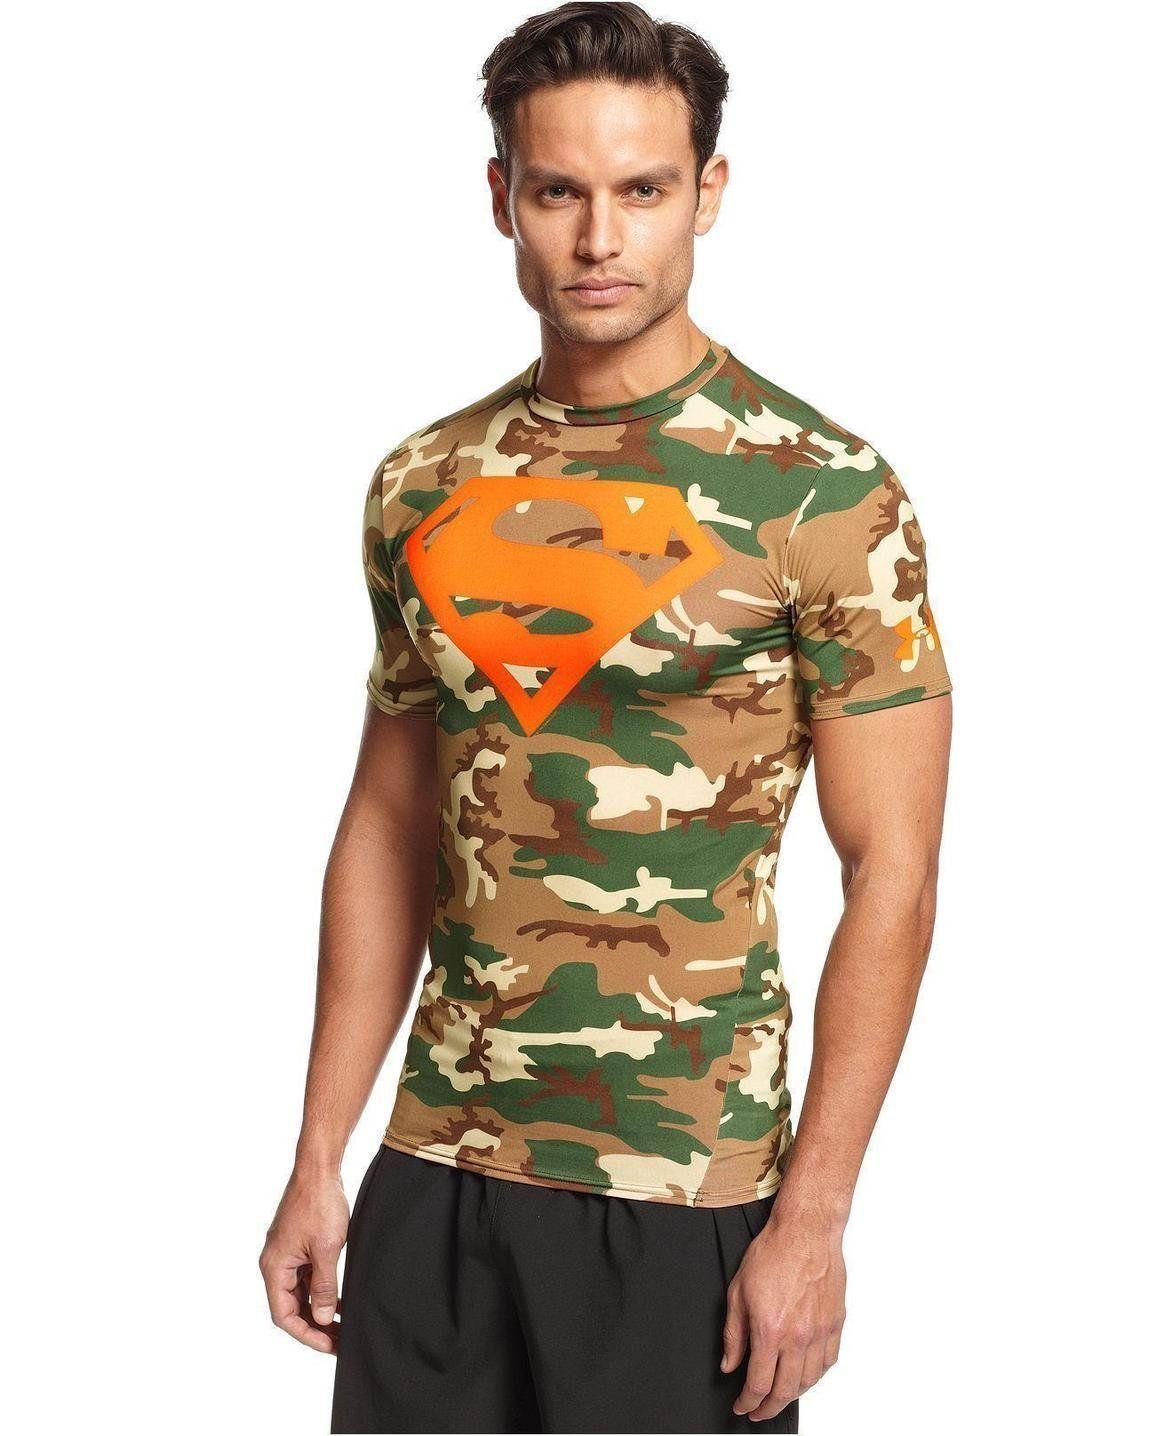 Orange Camo Superman Logo - Under Armour Alter Ego Camo & Orange #Superman Compression T Shirt